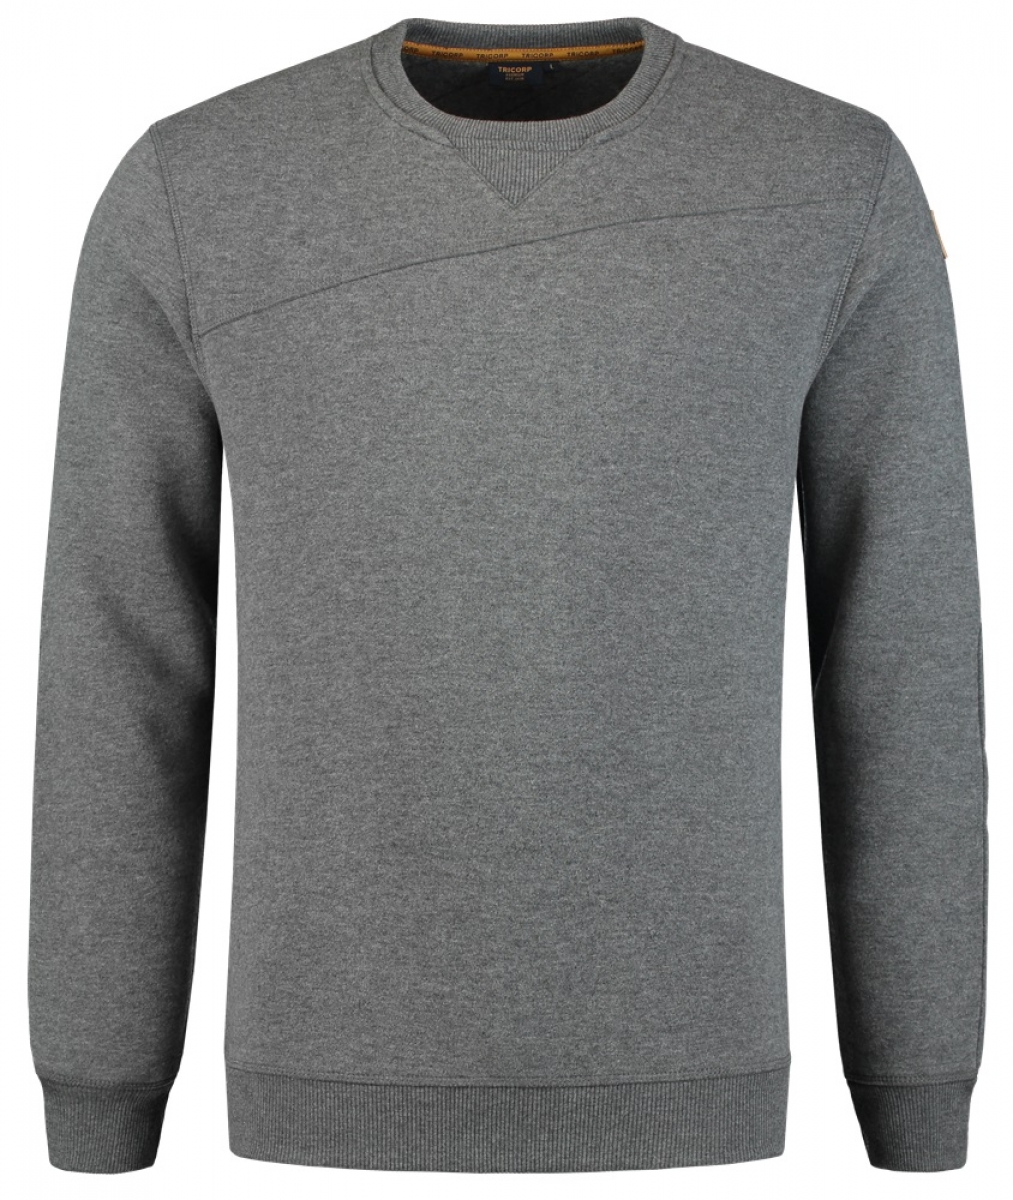 TRICORP-Worker-Shirts, Sweater, Premium, 300 g/m, stonemel